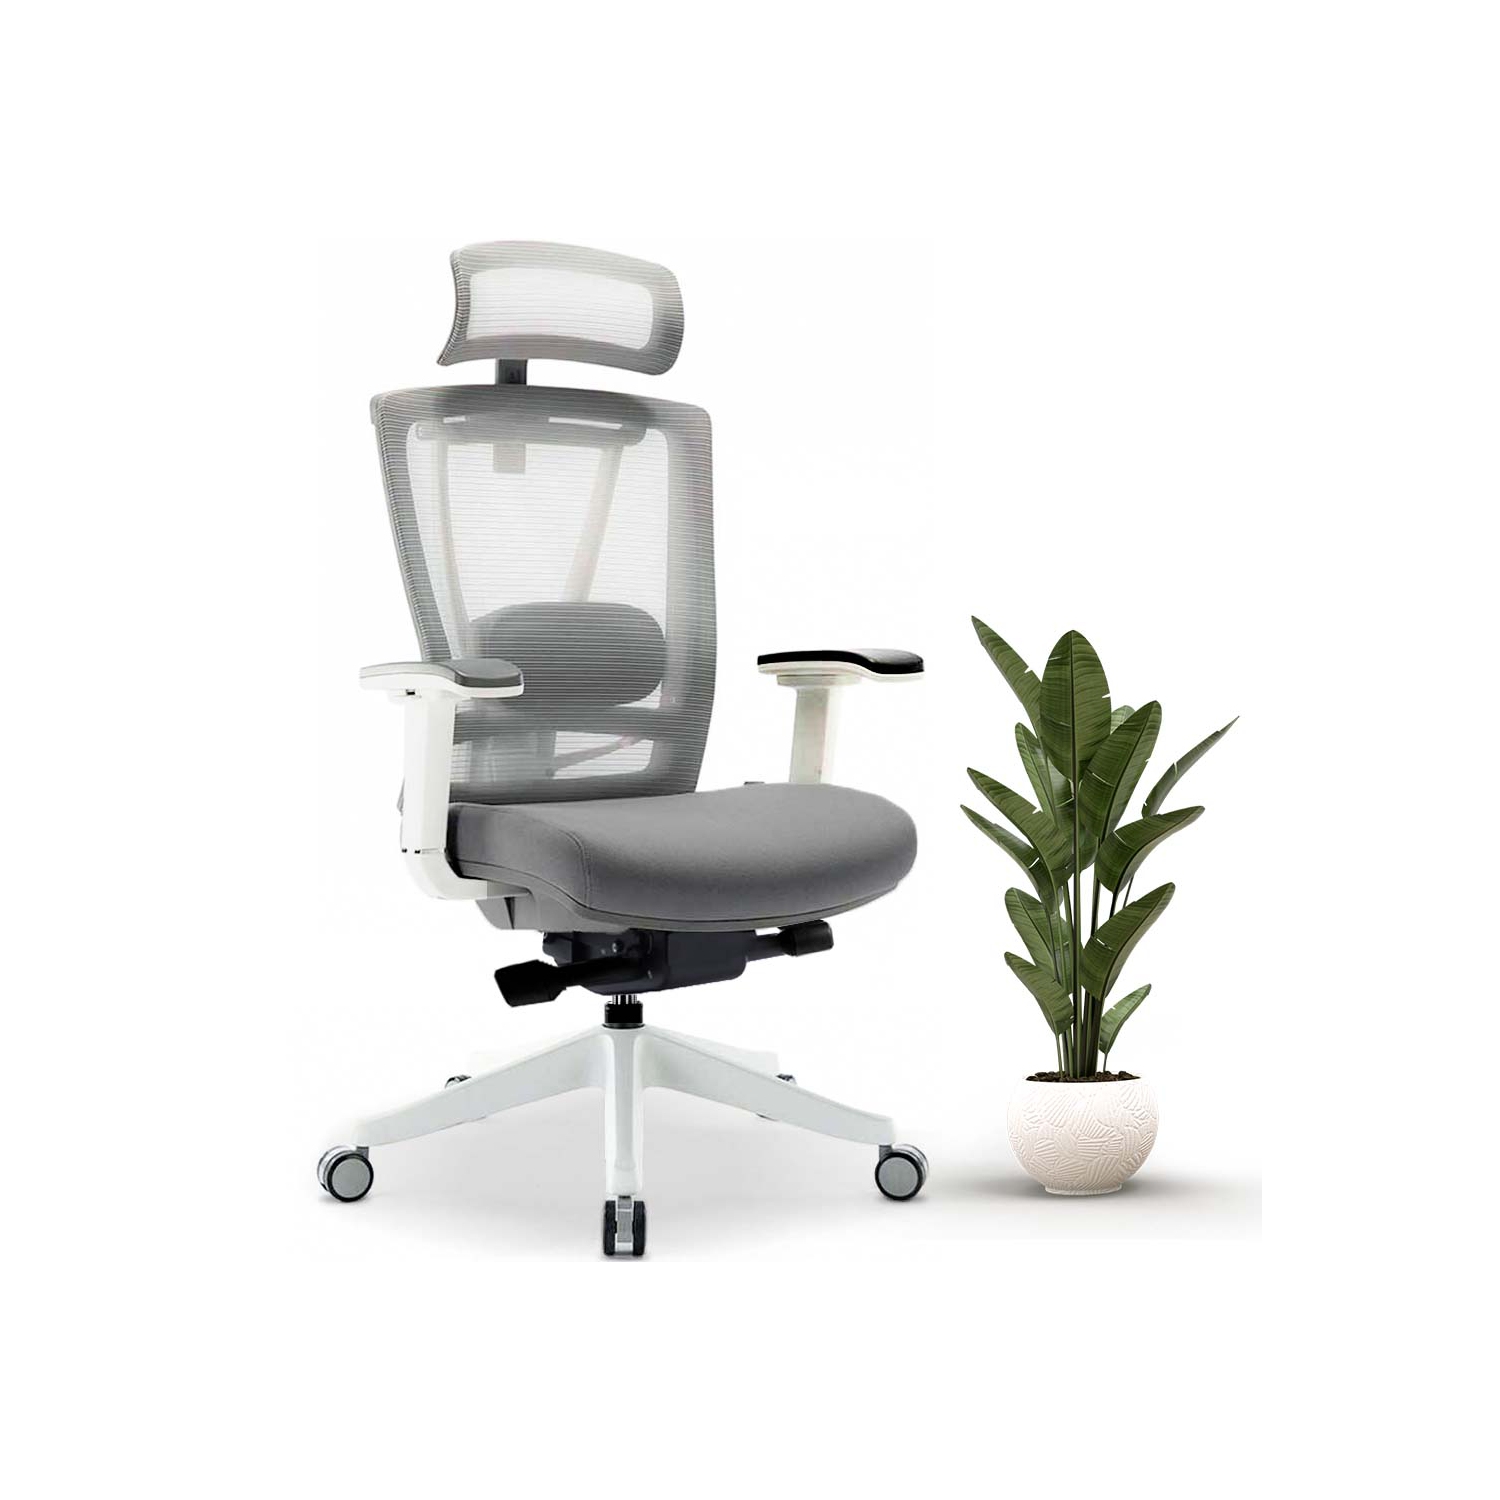 MotionGrey Cloud Mesh Series Executive Ergonomic Computer Desk Home Office Chair with 4D Armrest & Lumbar Support - White